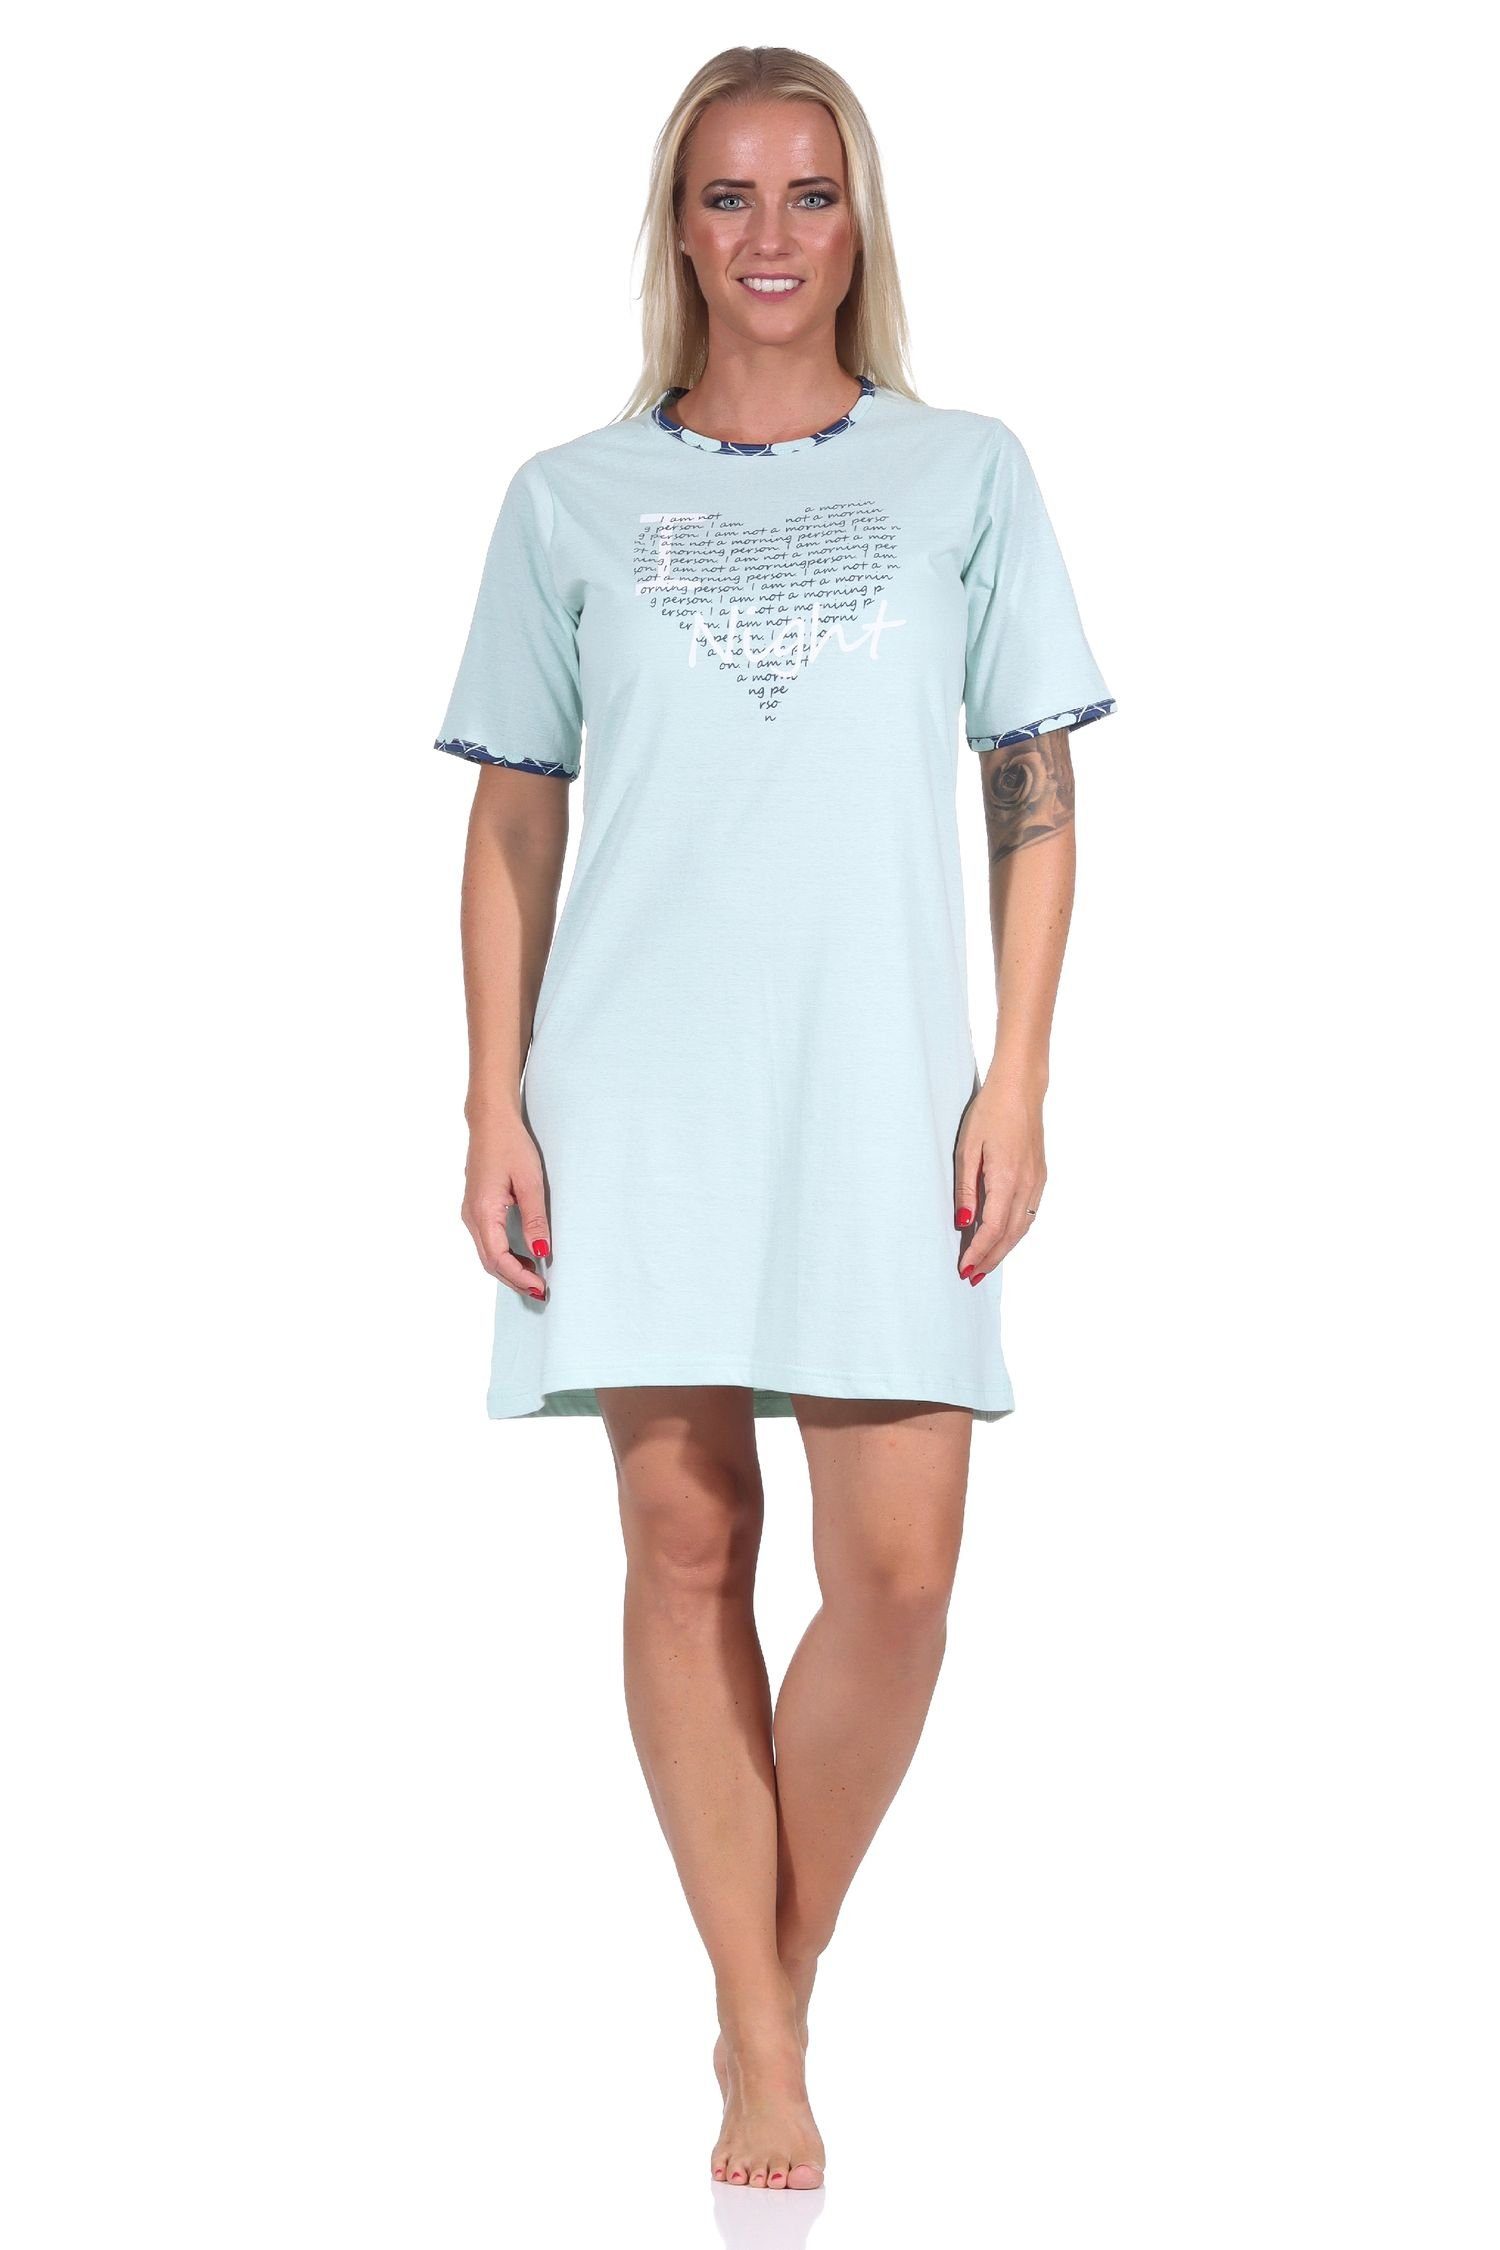 RELAX by Normann Nachthemd Cooles Damen kurzarm Nachthemd Bigshirt mit Herz Motiv - 122 10 603 türkis